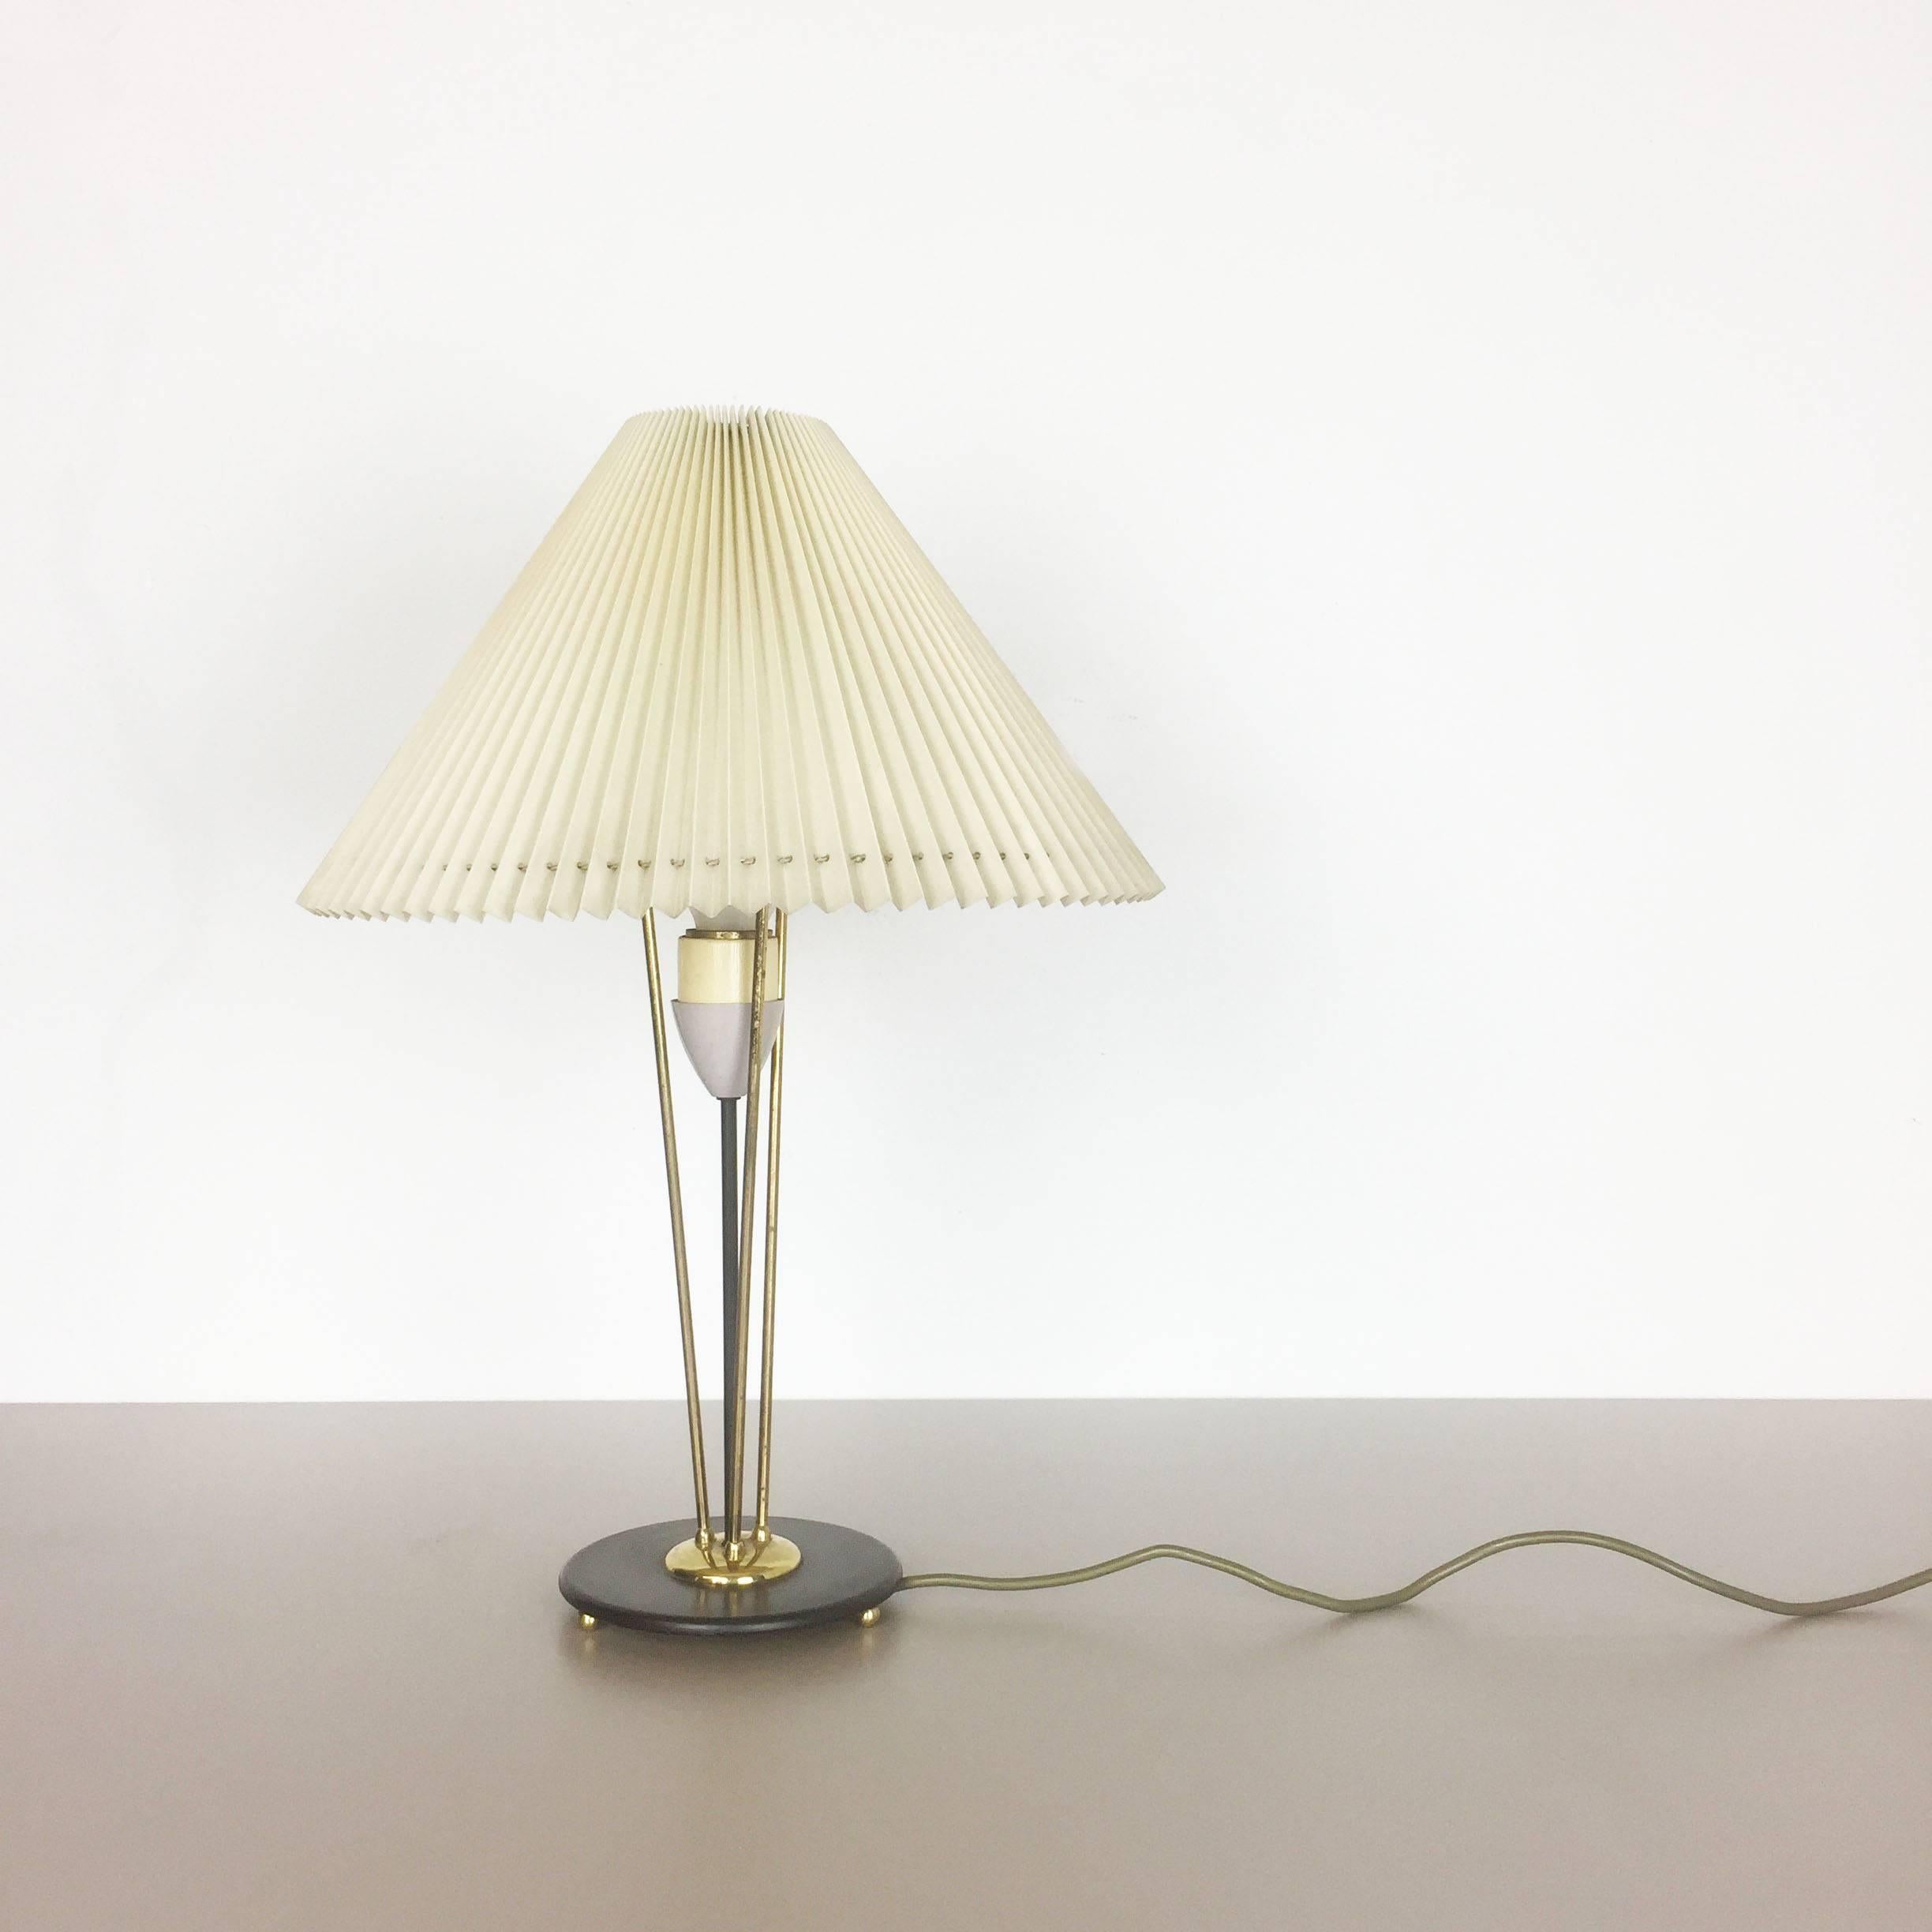 Original Modernist Huge Table Light with Metal Base, Italy, 1960s For Sale 3